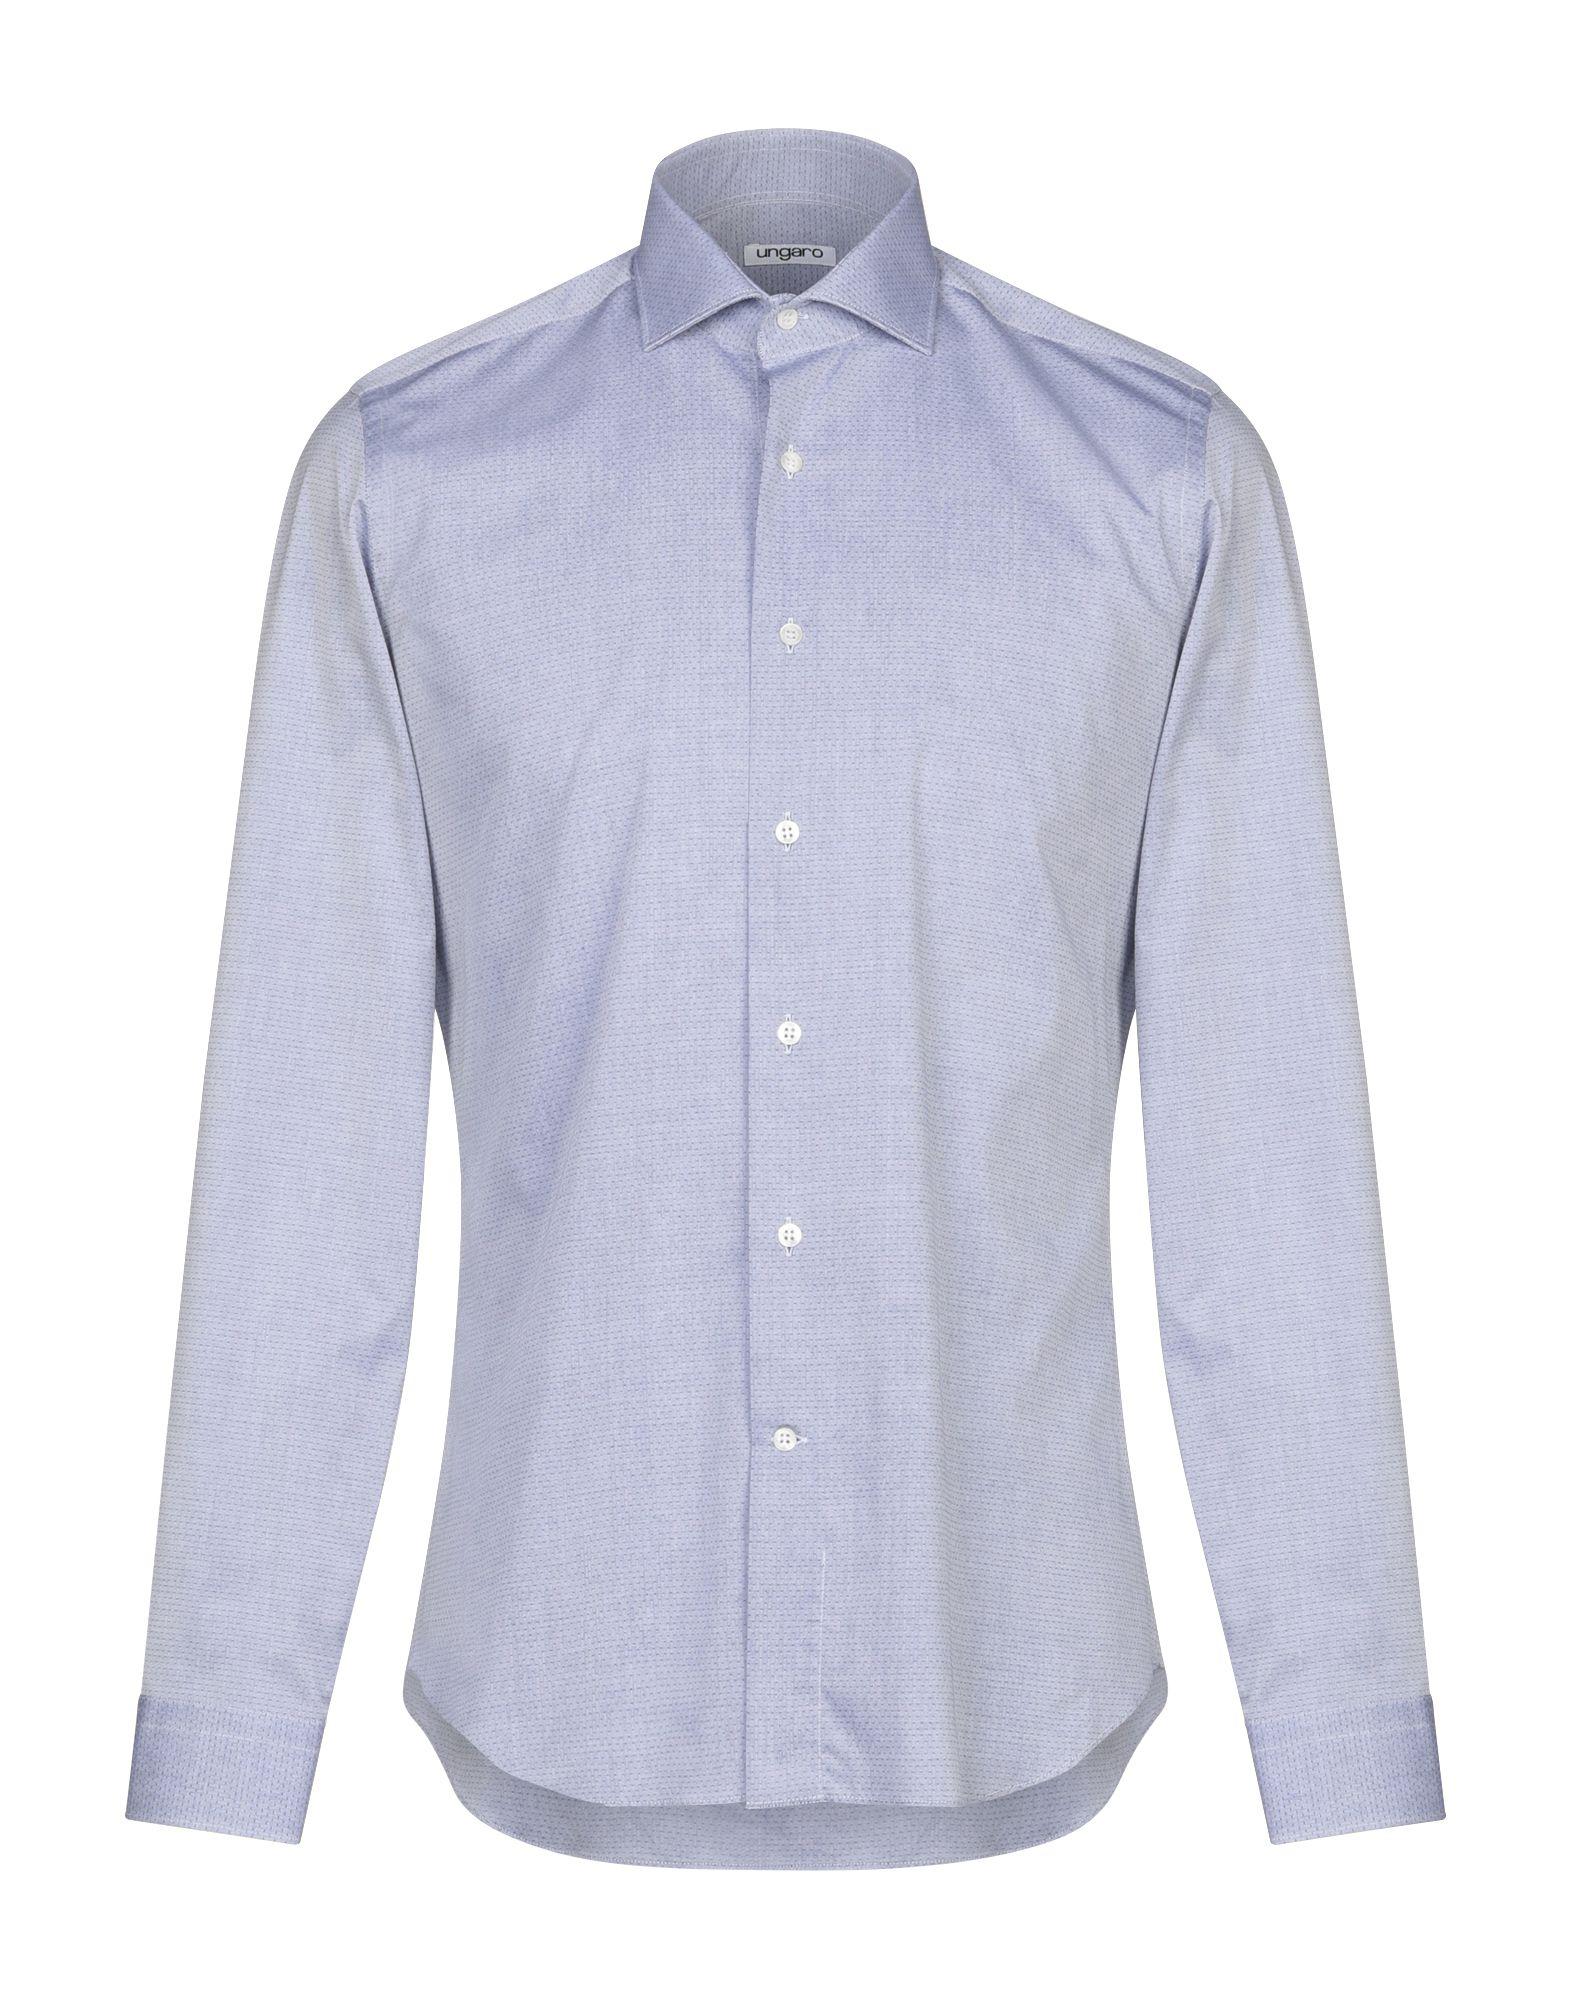 Emanuel Ungaro Cotton Shirt in Slate Blue (Blue) for Men - Lyst